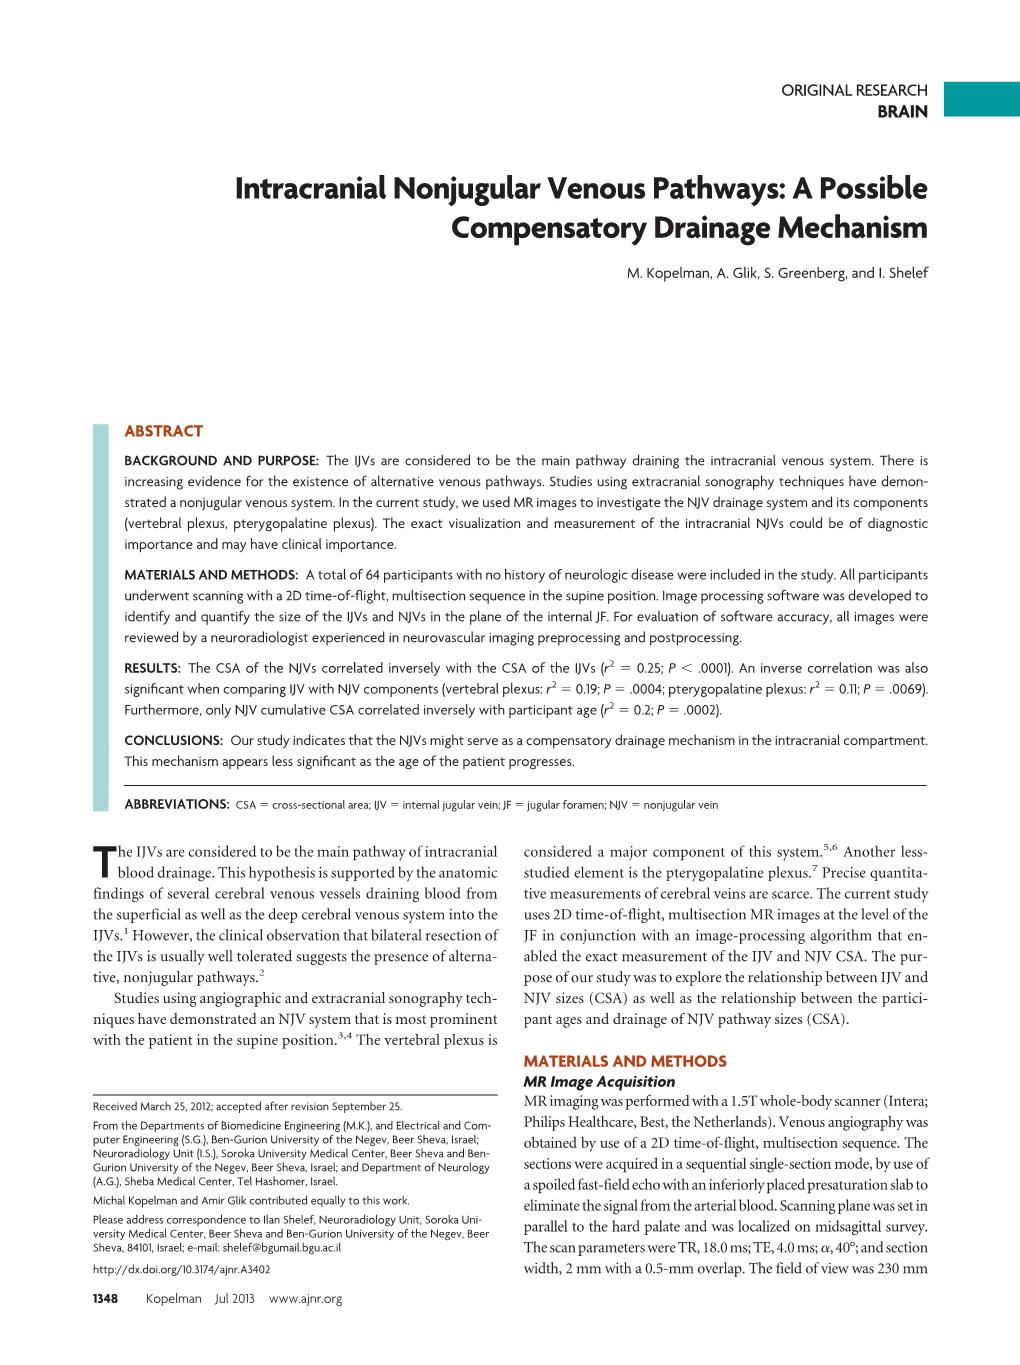 Intracranial Nonjugular Venous Pathways: a Possible Compensatory Drainage Mechanism